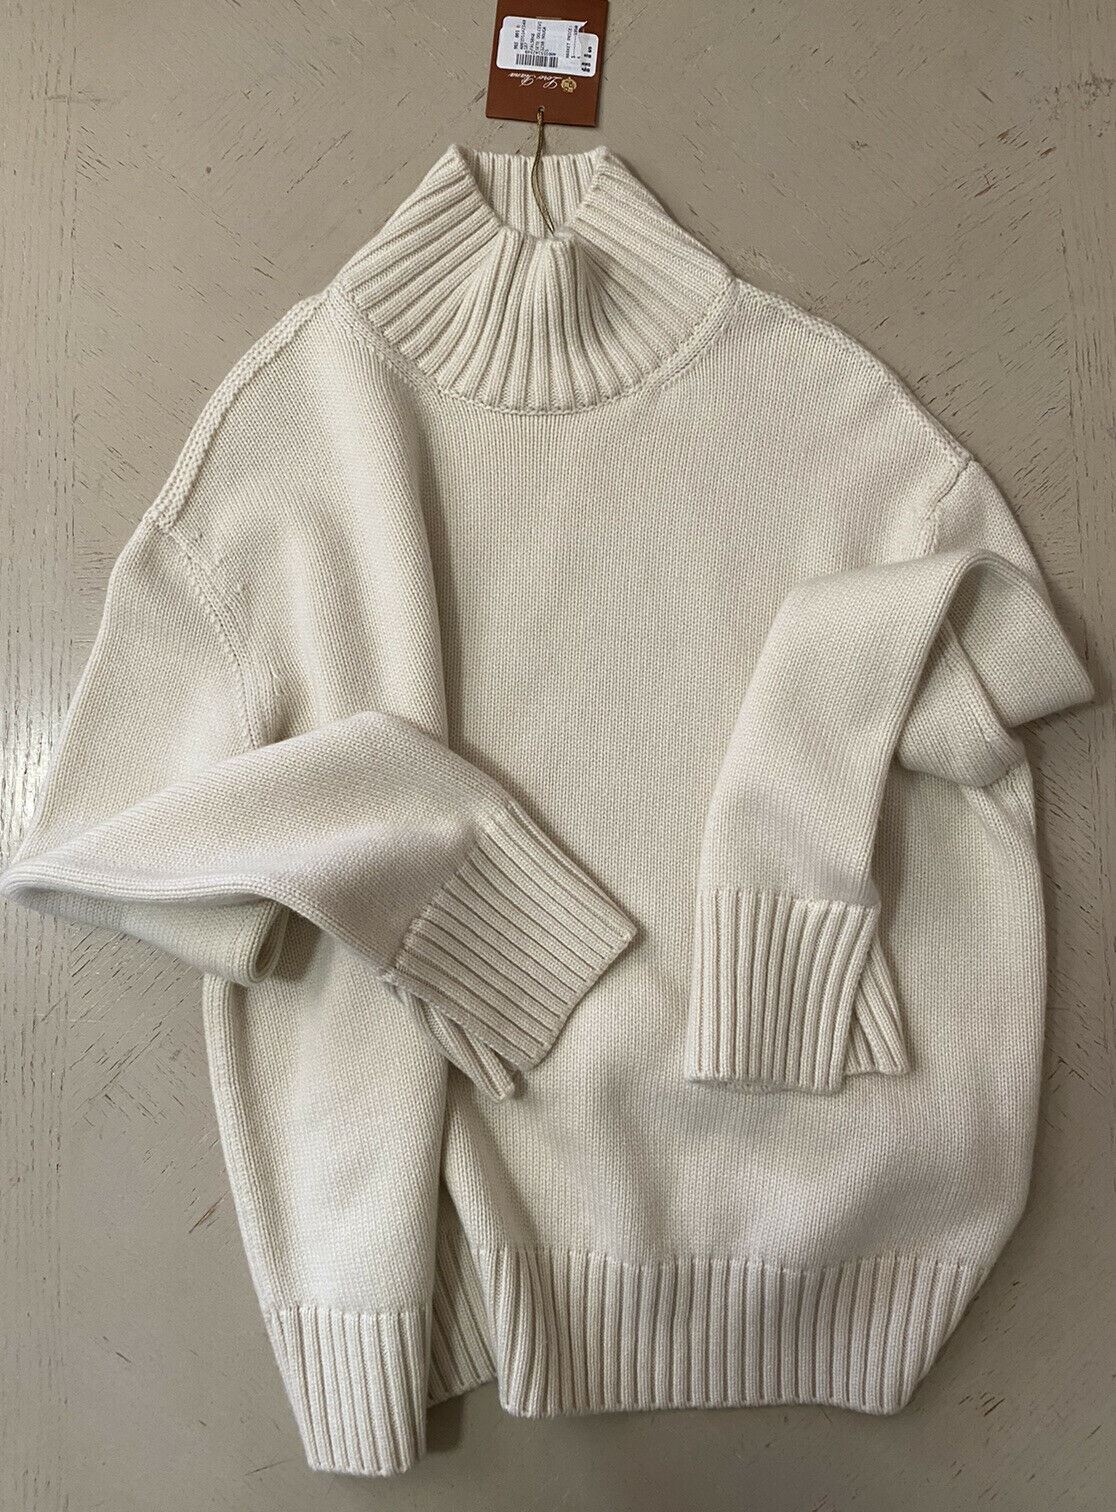 New $1950 Loro Piana Women Dolce Vita Turtleneck Cashmere Sweater Cream S Italy